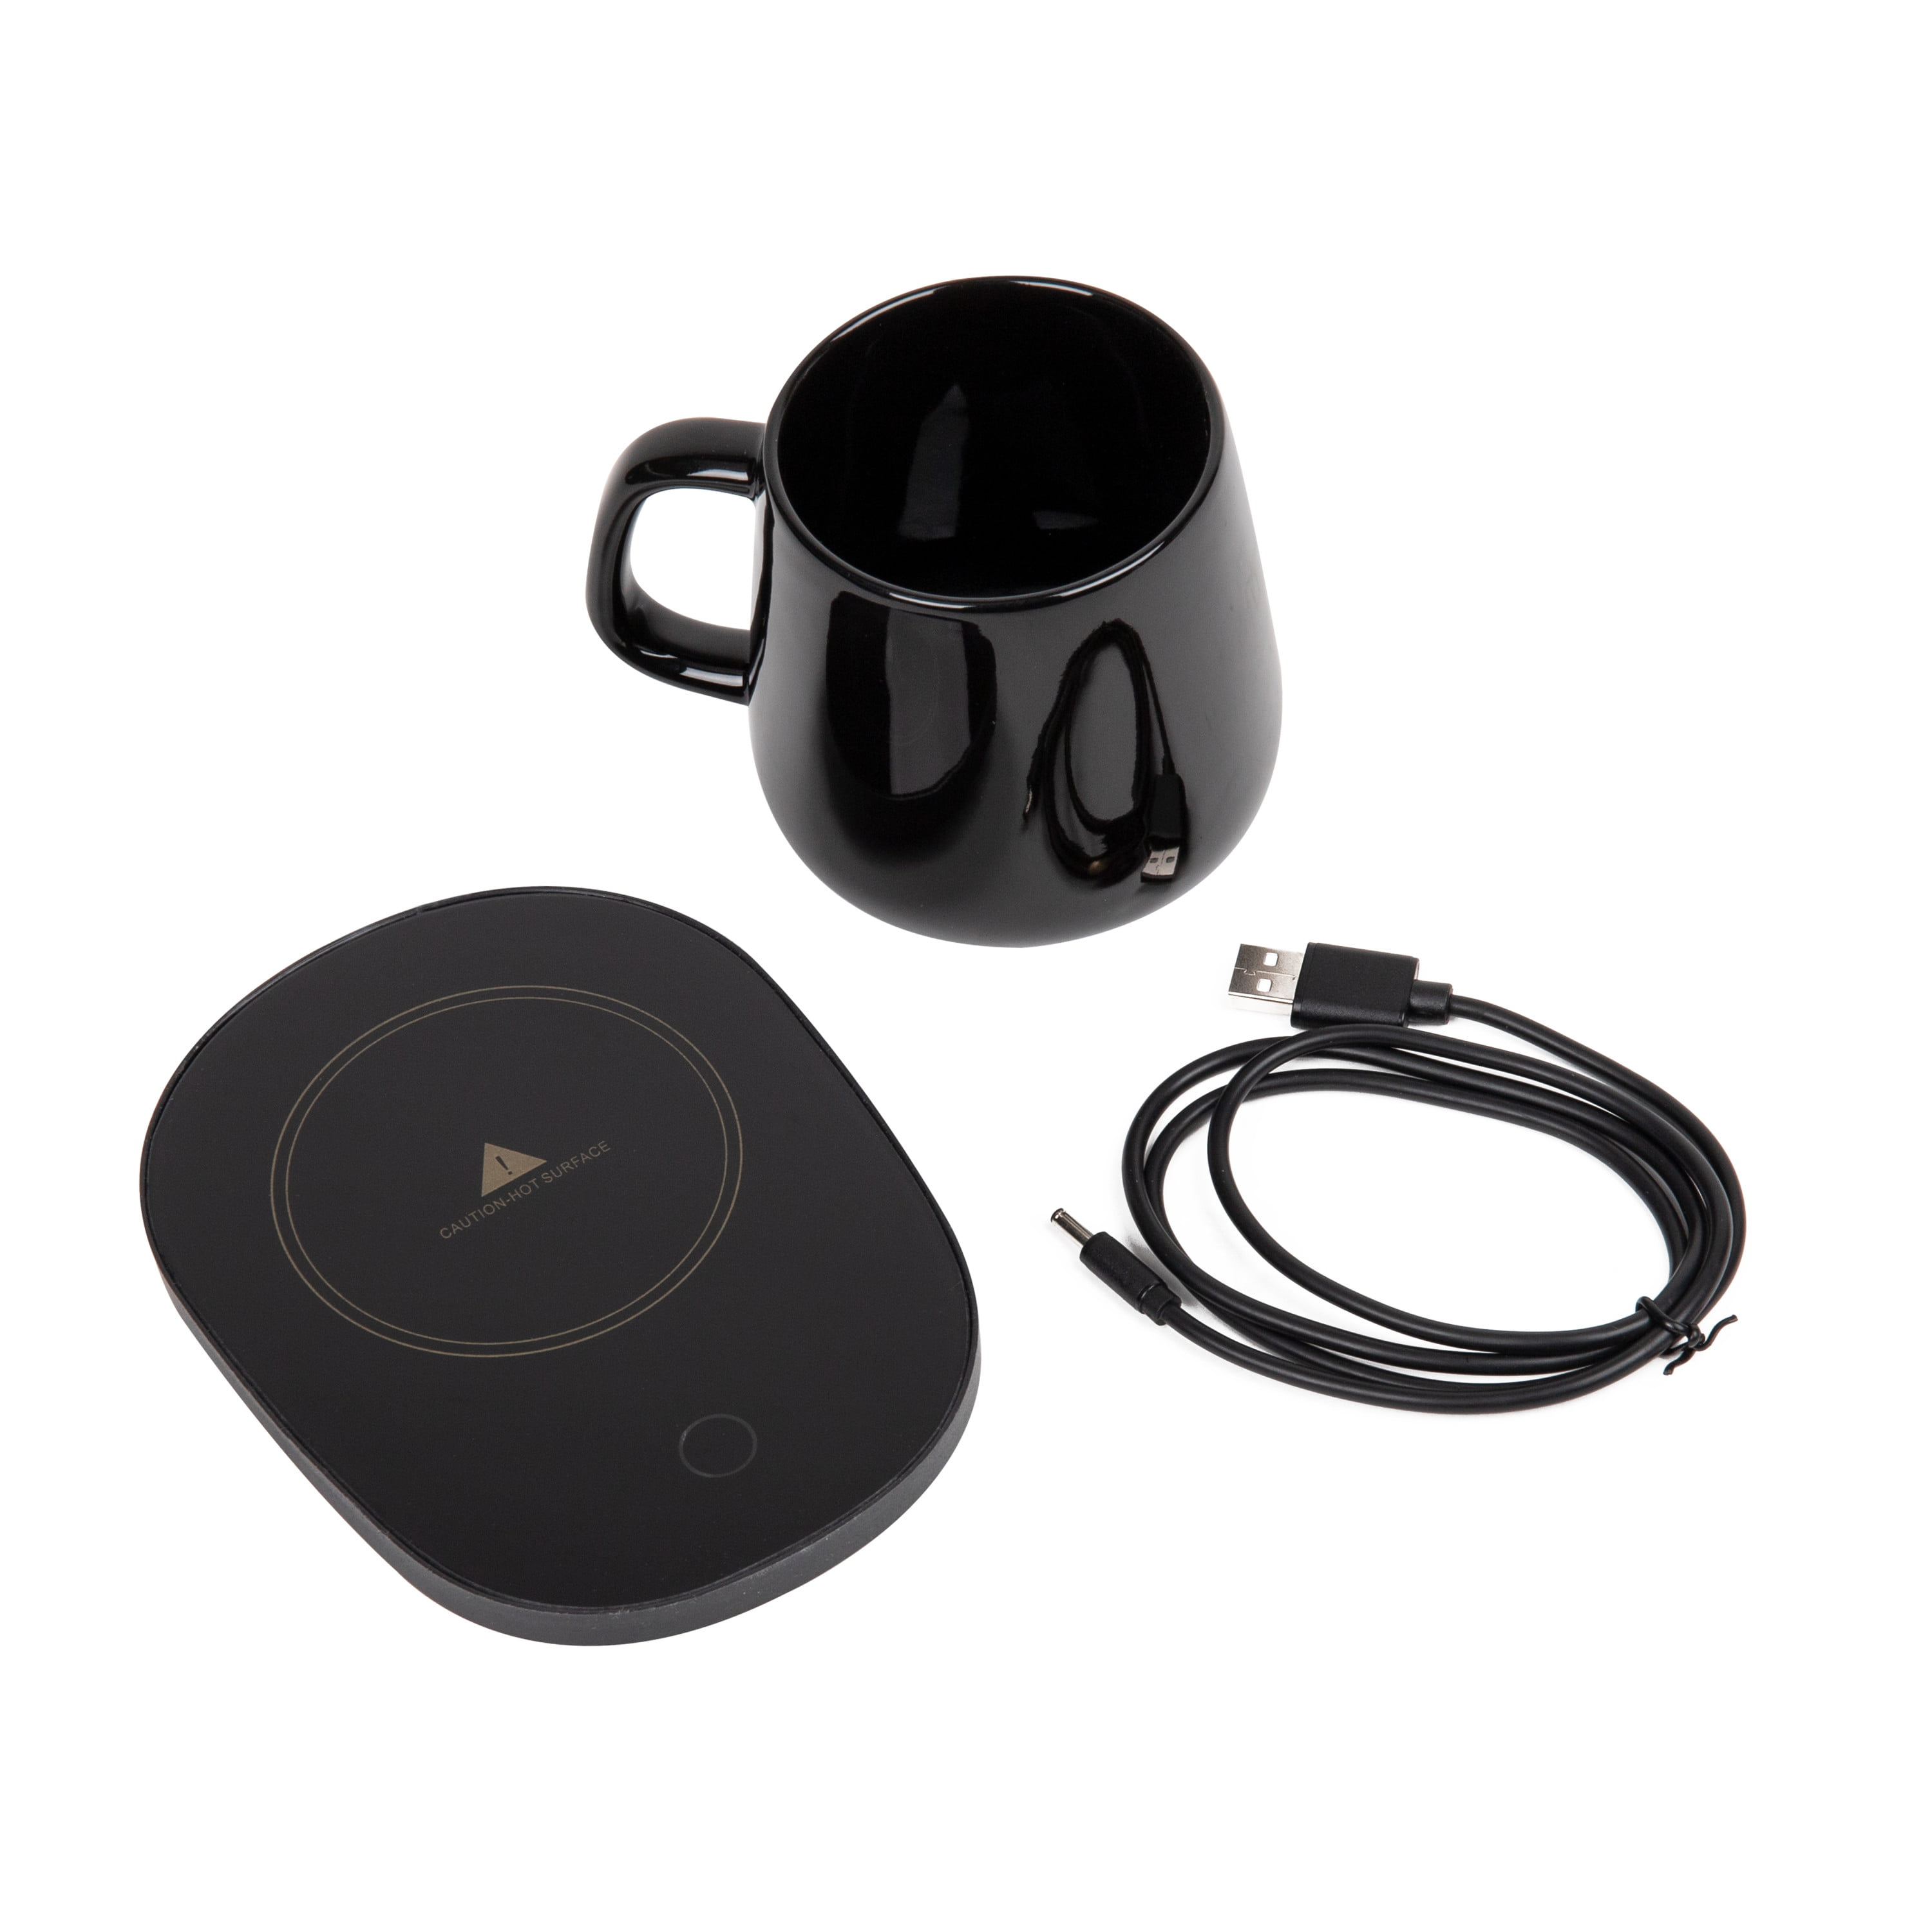 Toorise Cup Warmer USB Coffee Mug Heating Pad 5W Compact Portable Mug  Heater Milk Tea Electric Fast Heating Cup Mat Constant for Home Office Dorm  Desk 